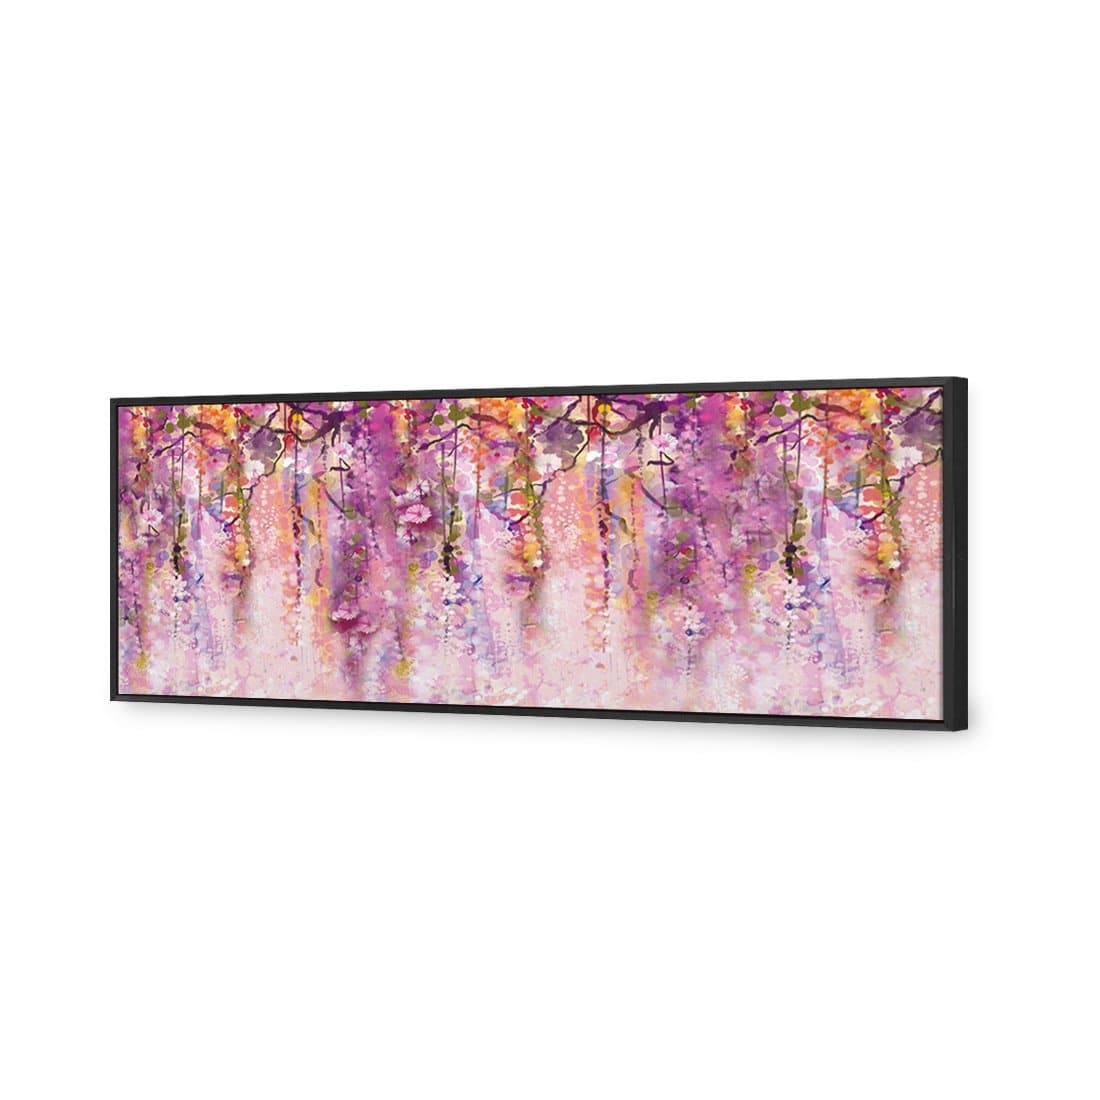 Lilac Dream (Long) Canvas Art-Canvas-Wall Art Designs-60x20cm-Canvas - Black Frame-Wall Art Designs